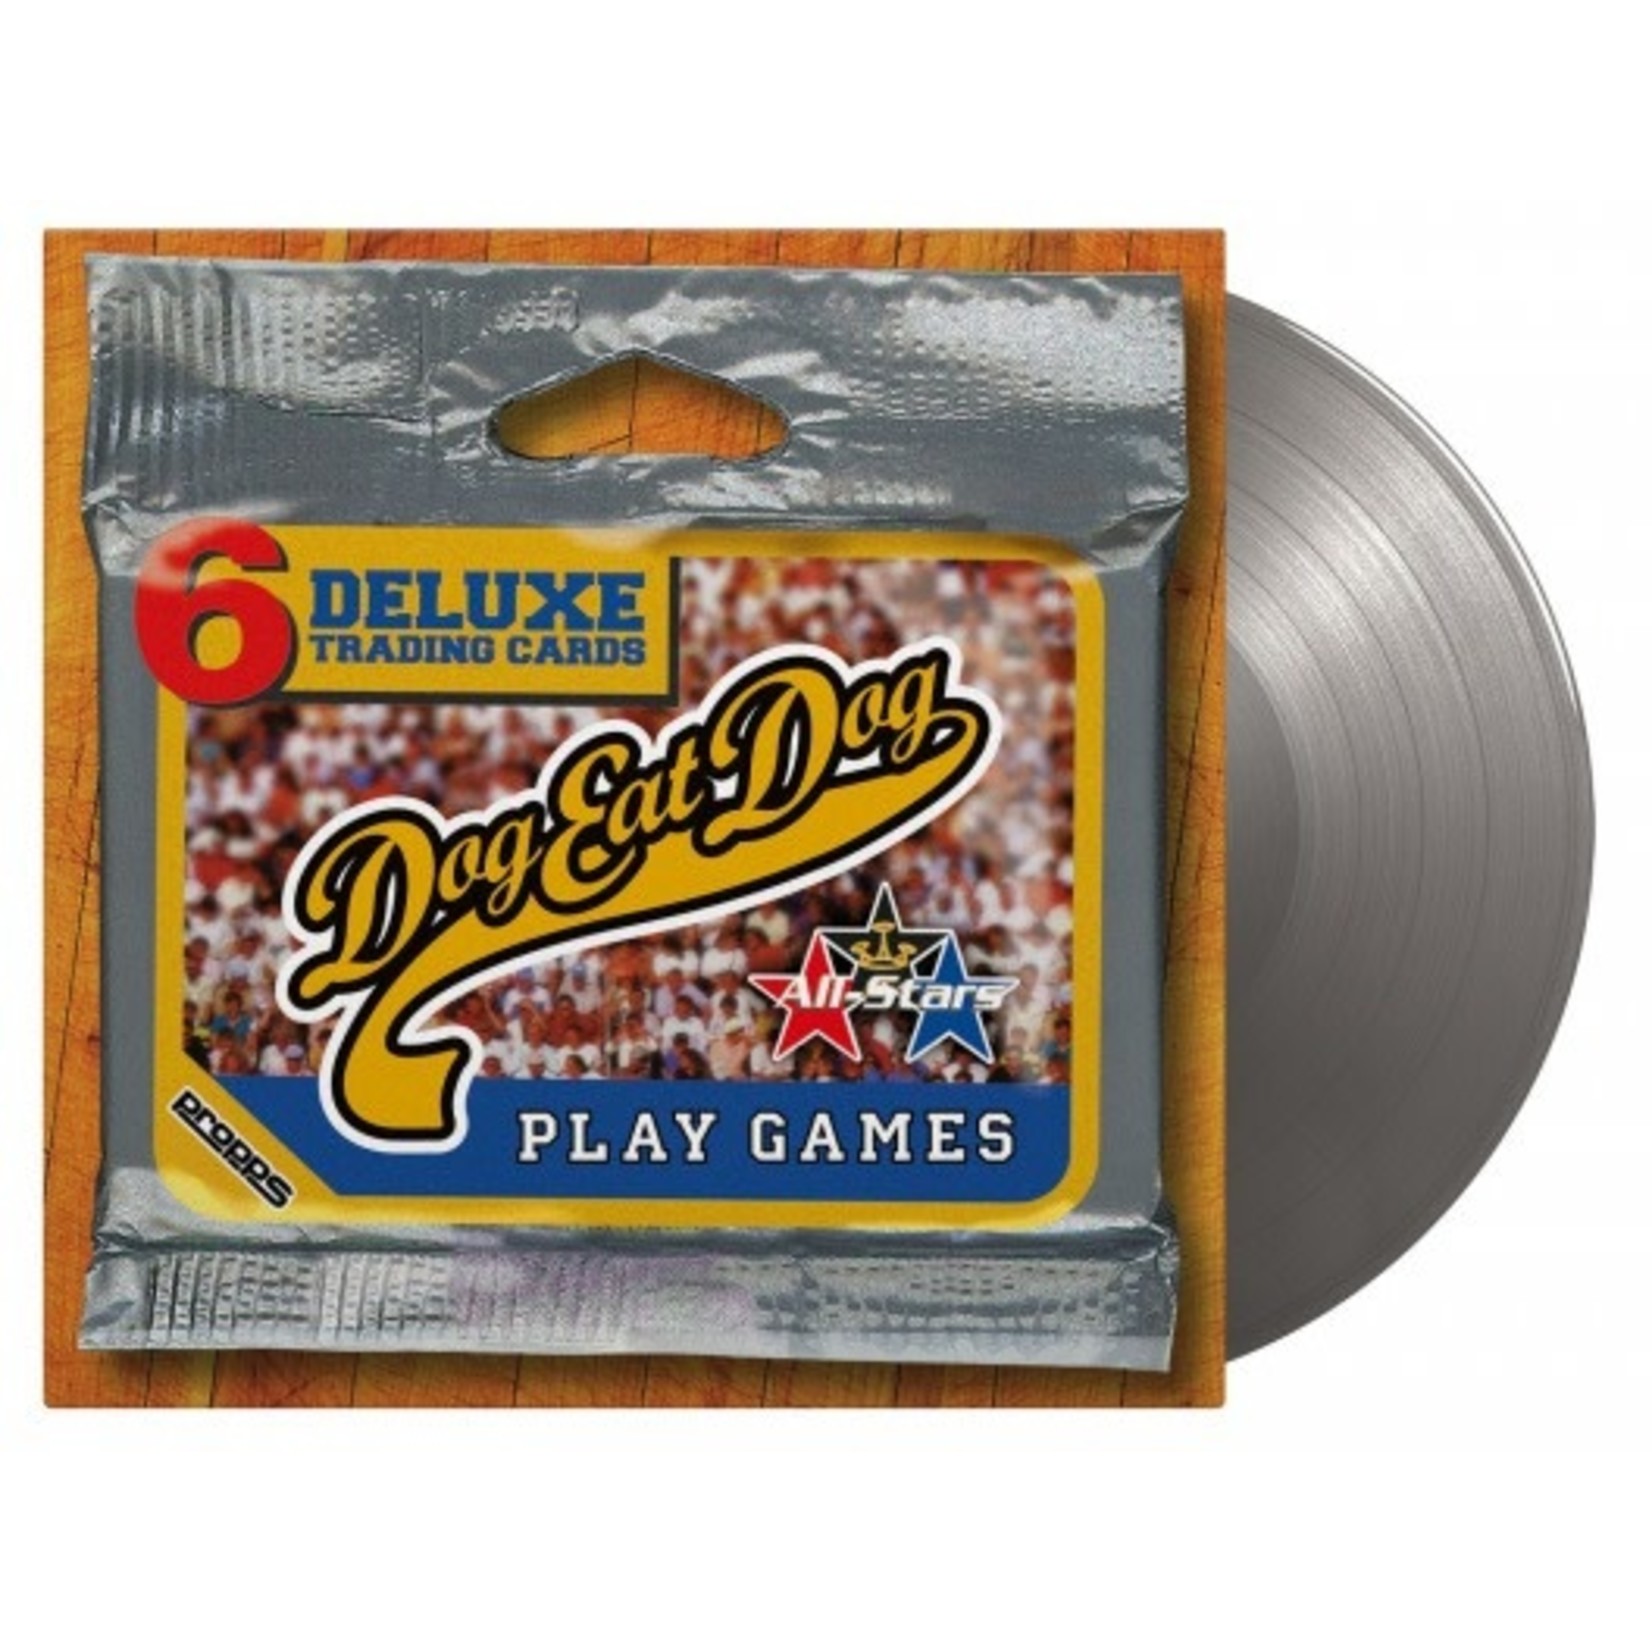 [New] Dog Eat Dog - Play Games (180g, silver vinyl)